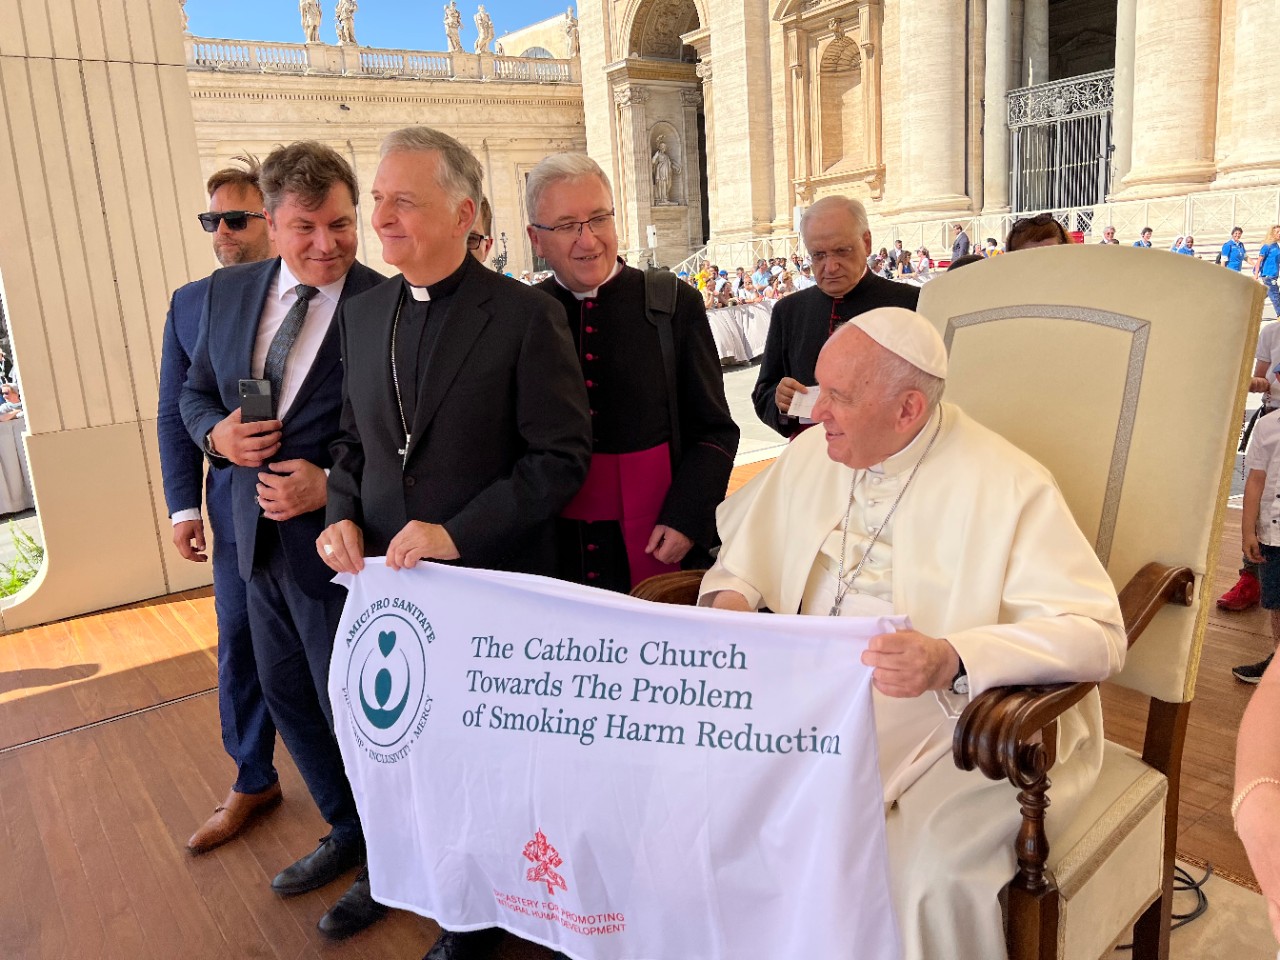 The Catholic Church towards the problem of smoking harm reduction